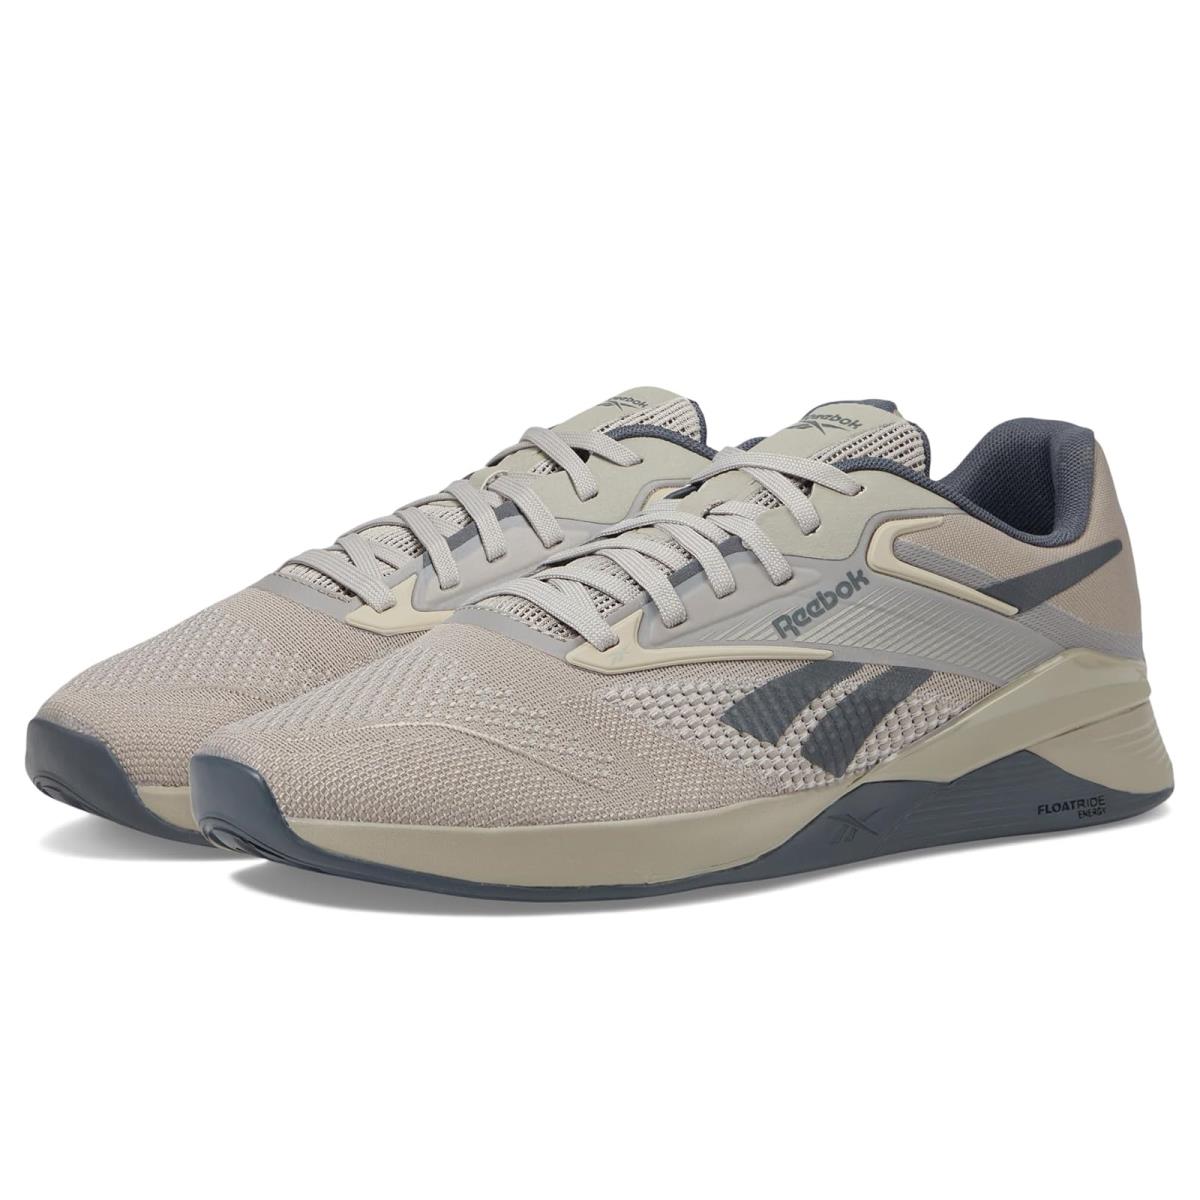 Unisex Sneakers Athletic Shoes Reebok Nano X4 - Ash/Grey/Ash